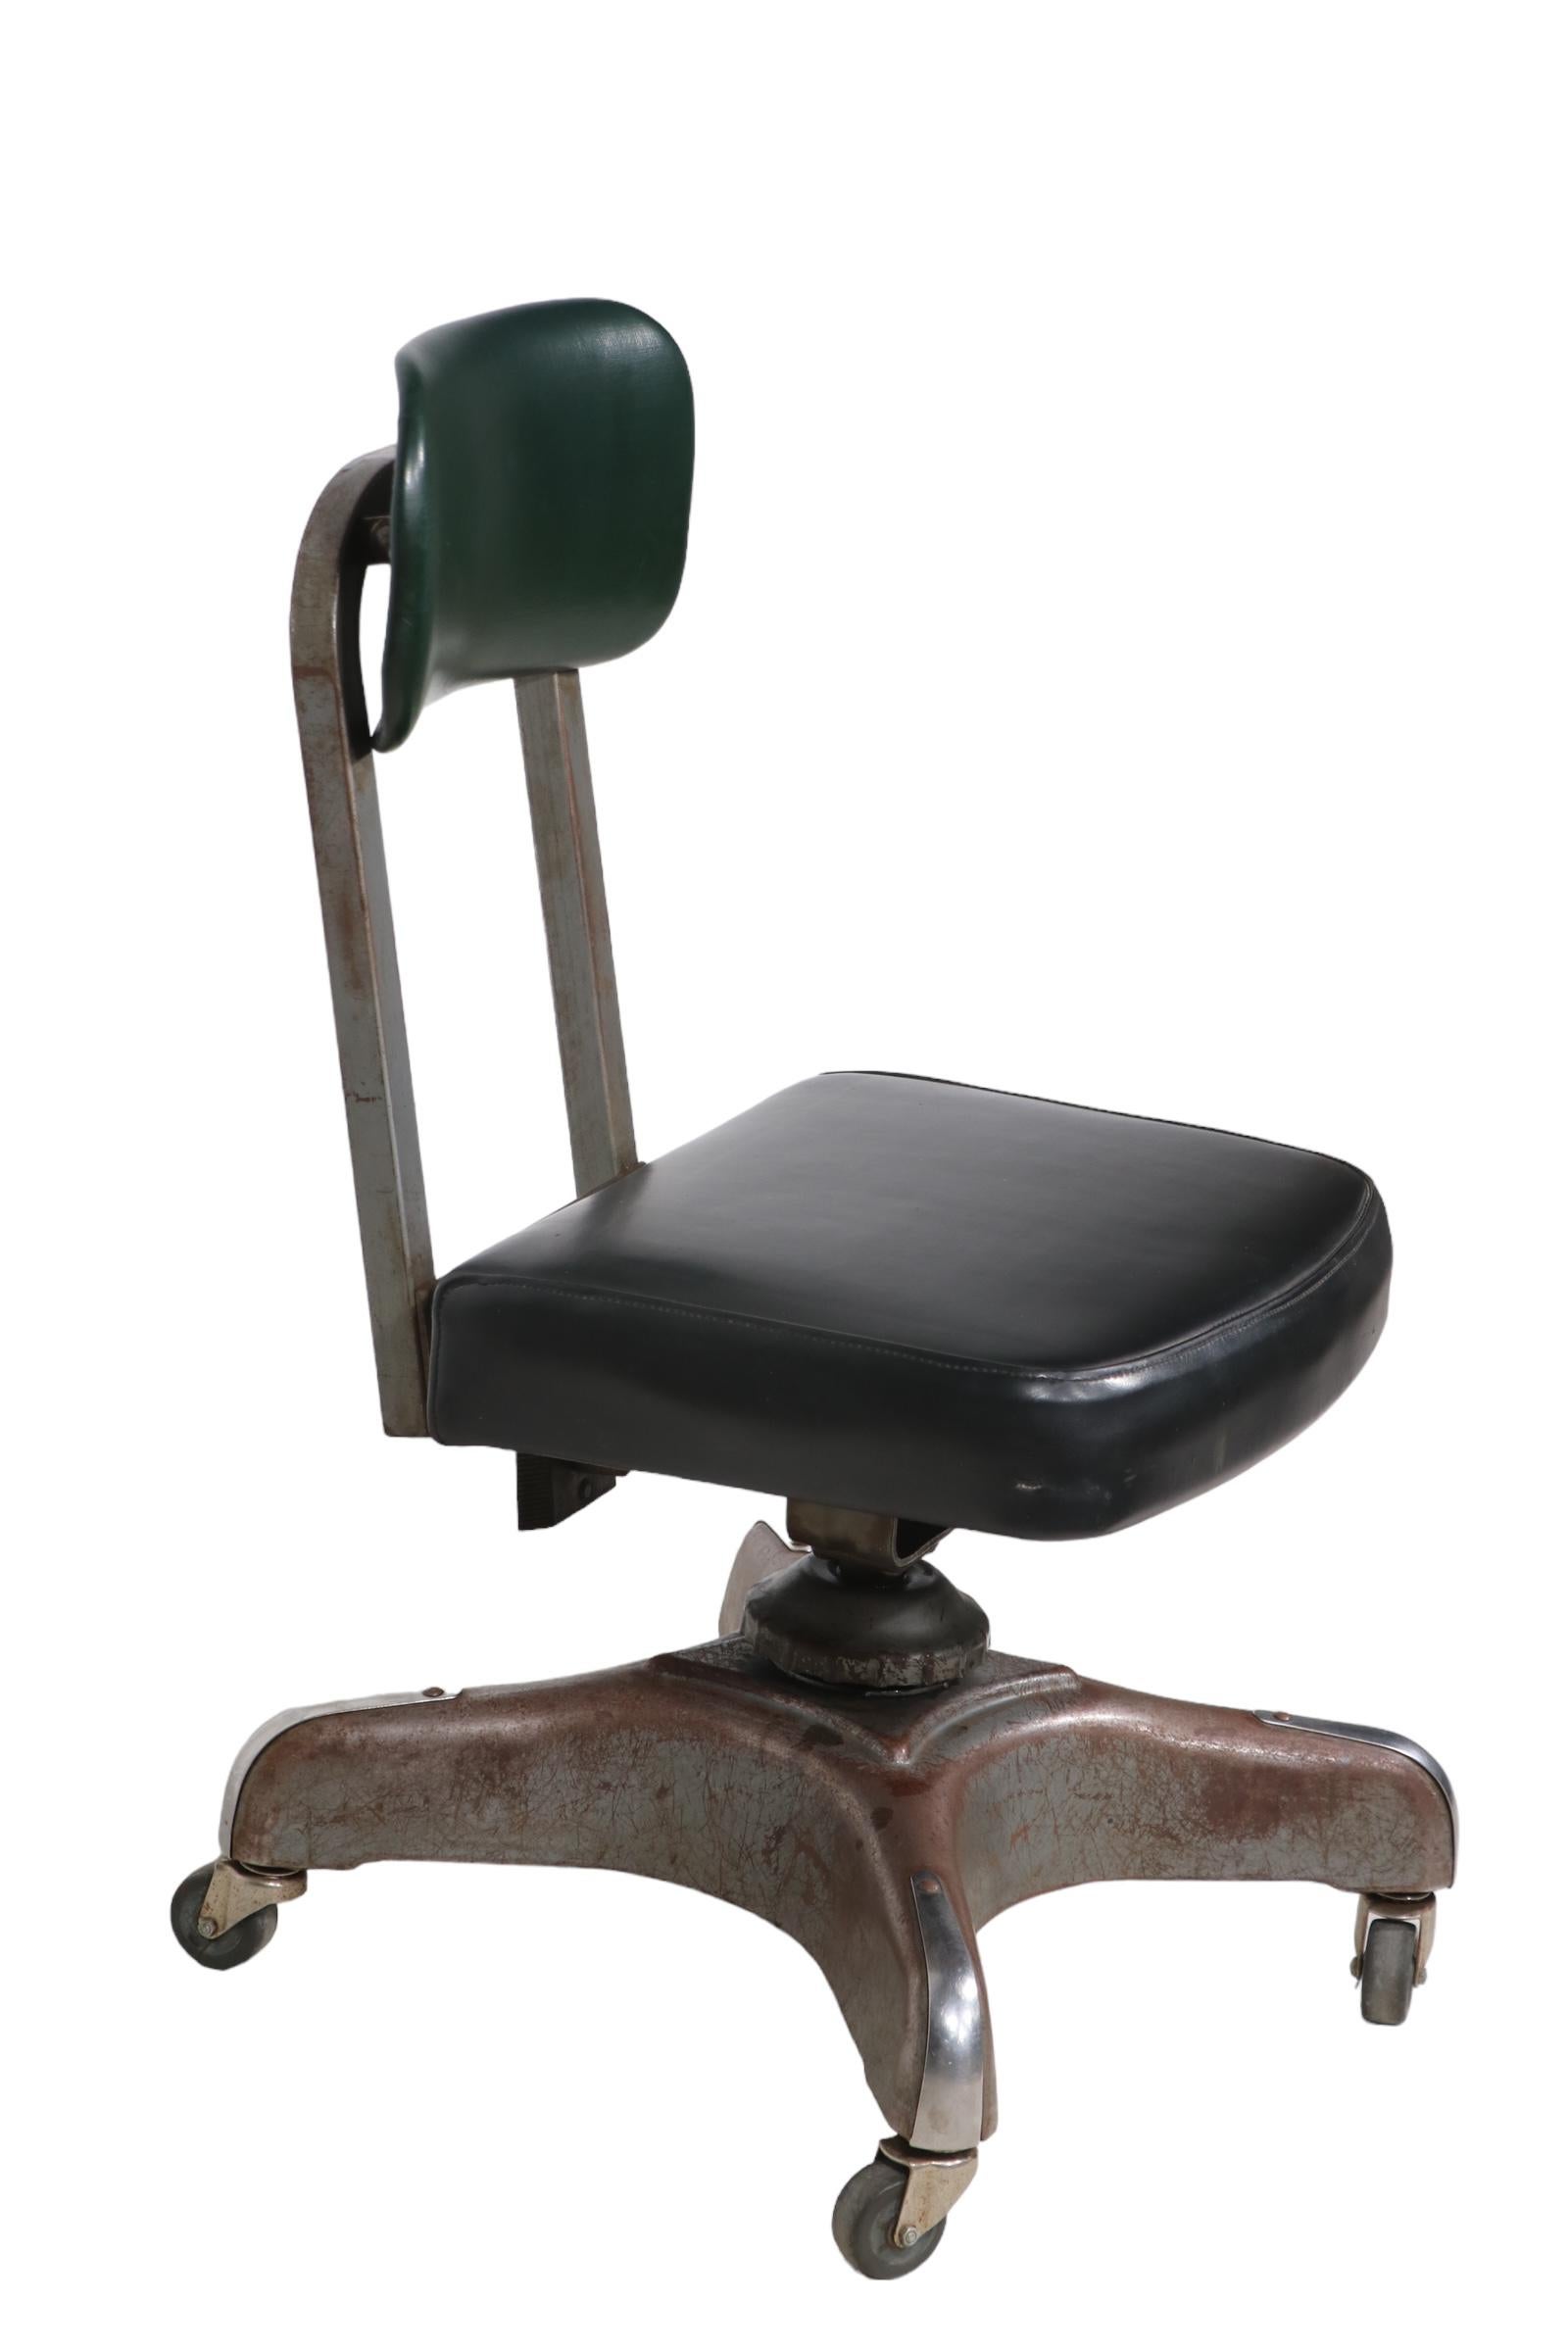 Art Deco Industrial Swivel Tilt Armless Desk Chair by Harter Corporation 1930/40 For Sale 4